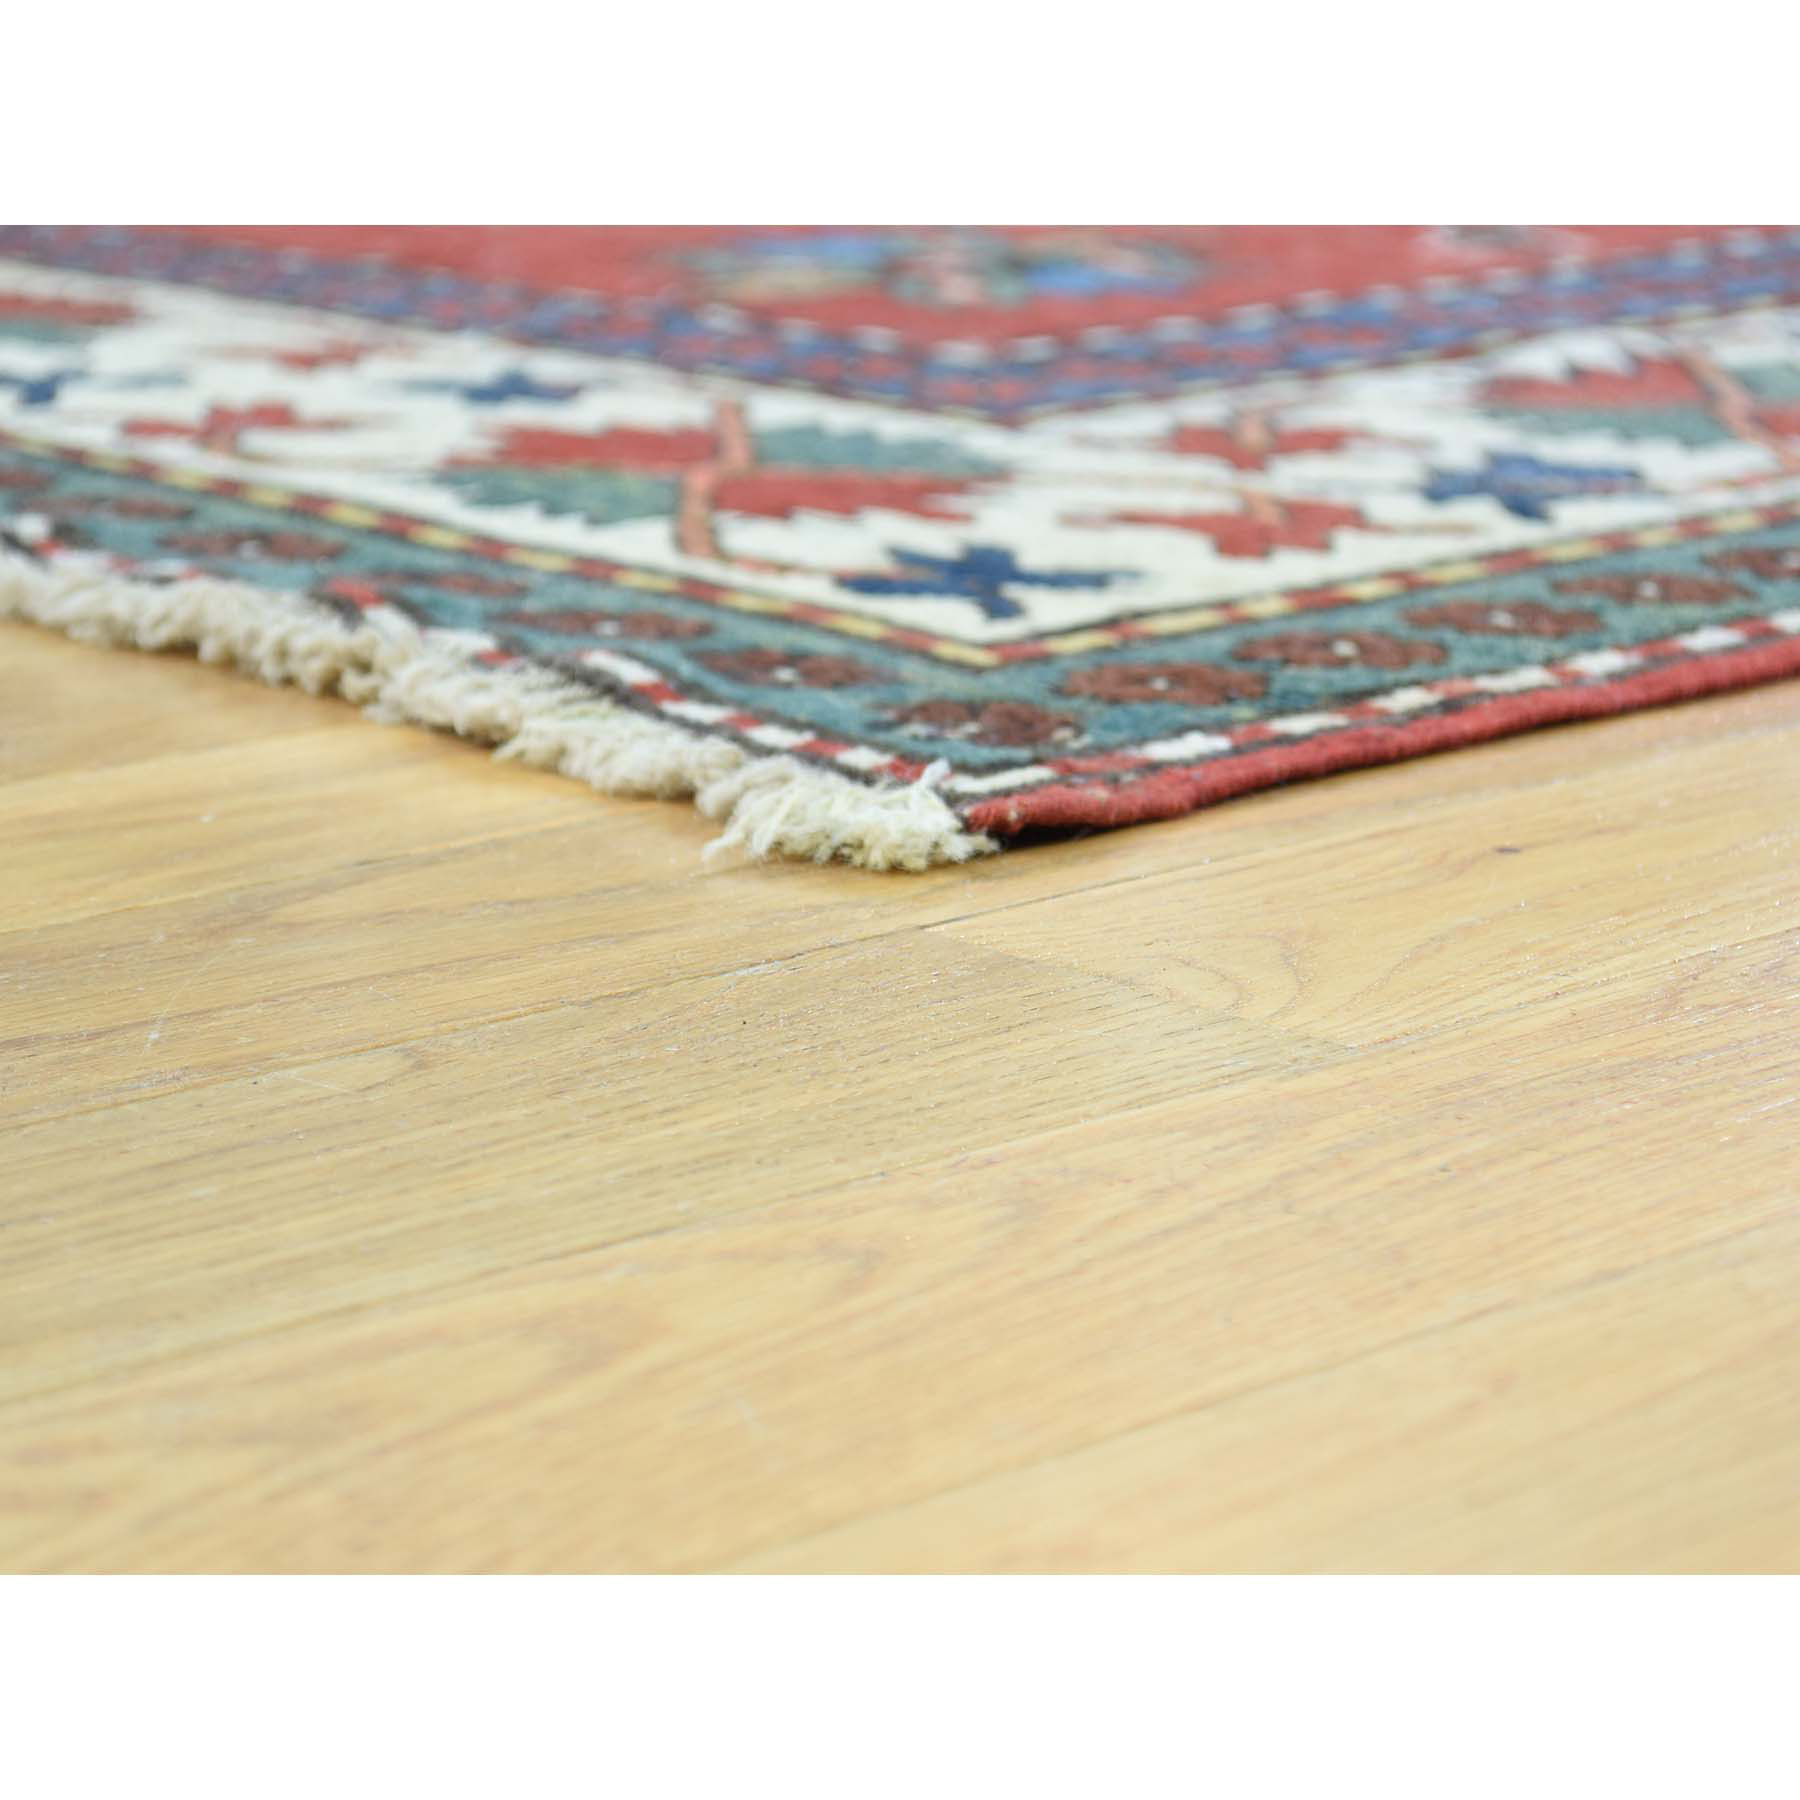 6-x8-9  Antique Kazak Exc Cond 100 Percent Wool Oriental Rug 